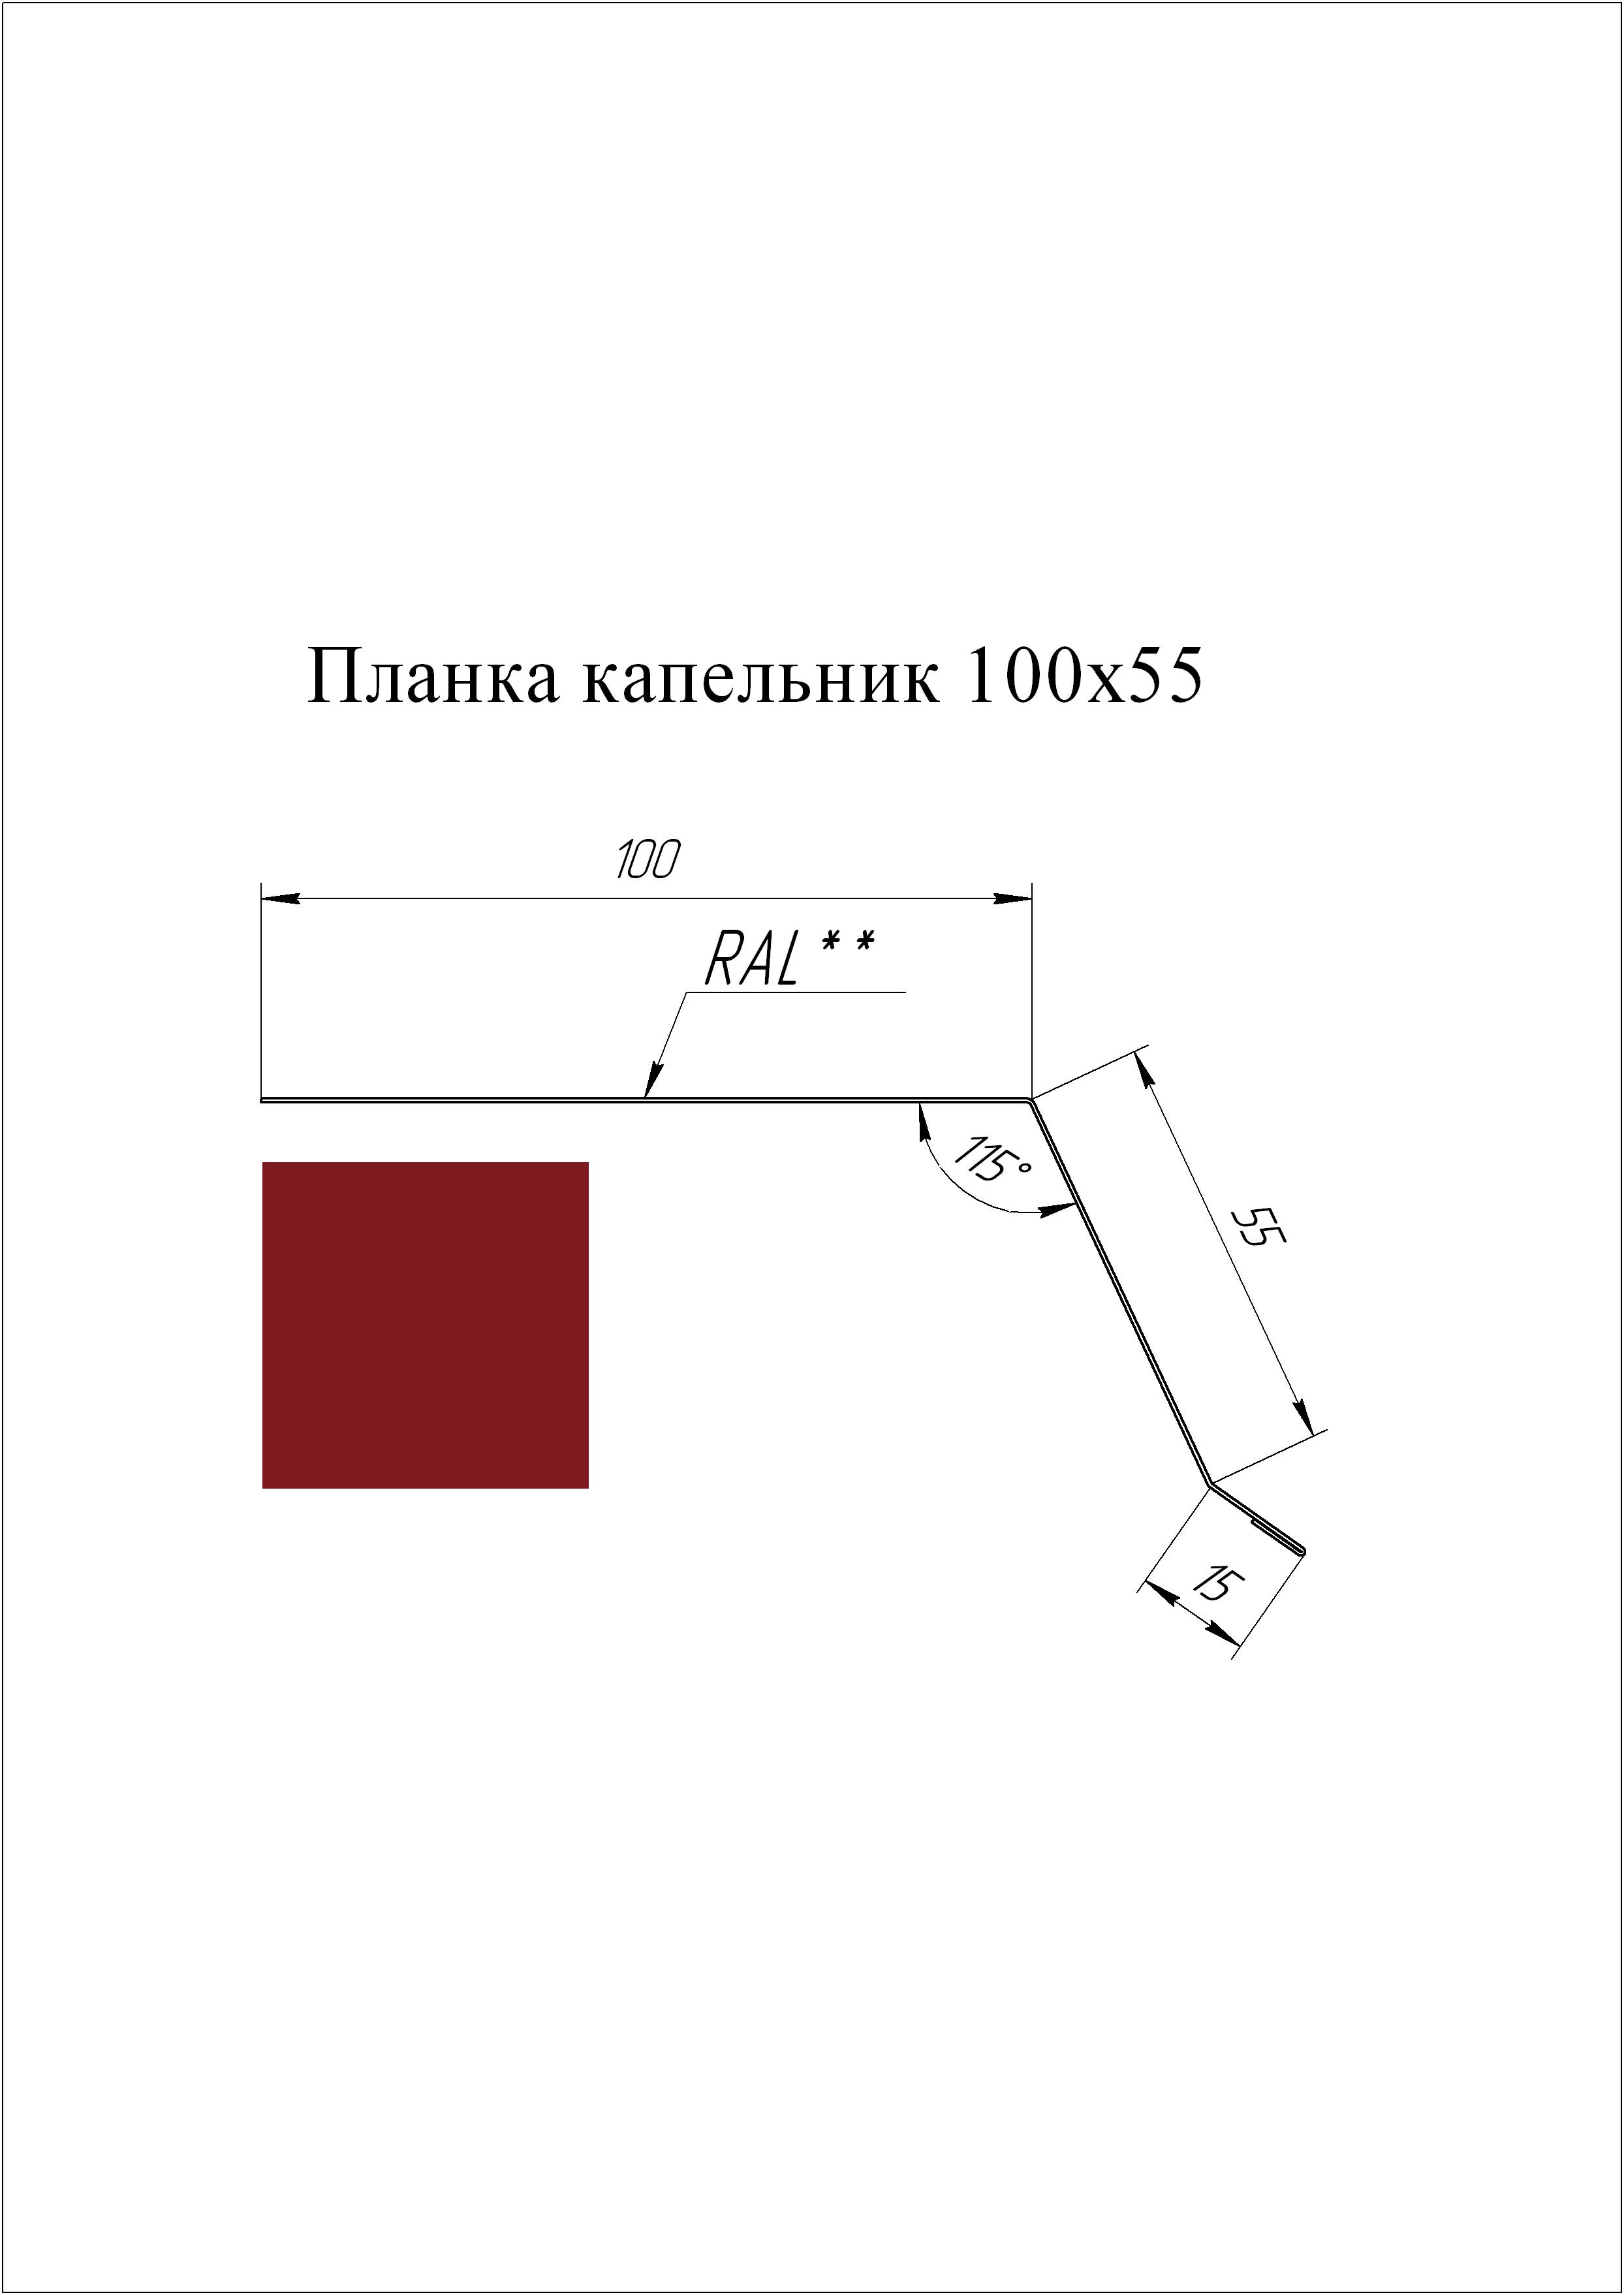 Планка капельник 100*55 мм L=3 м GL PE-полиэстер 0,45 RAL 3003 - красный рубин